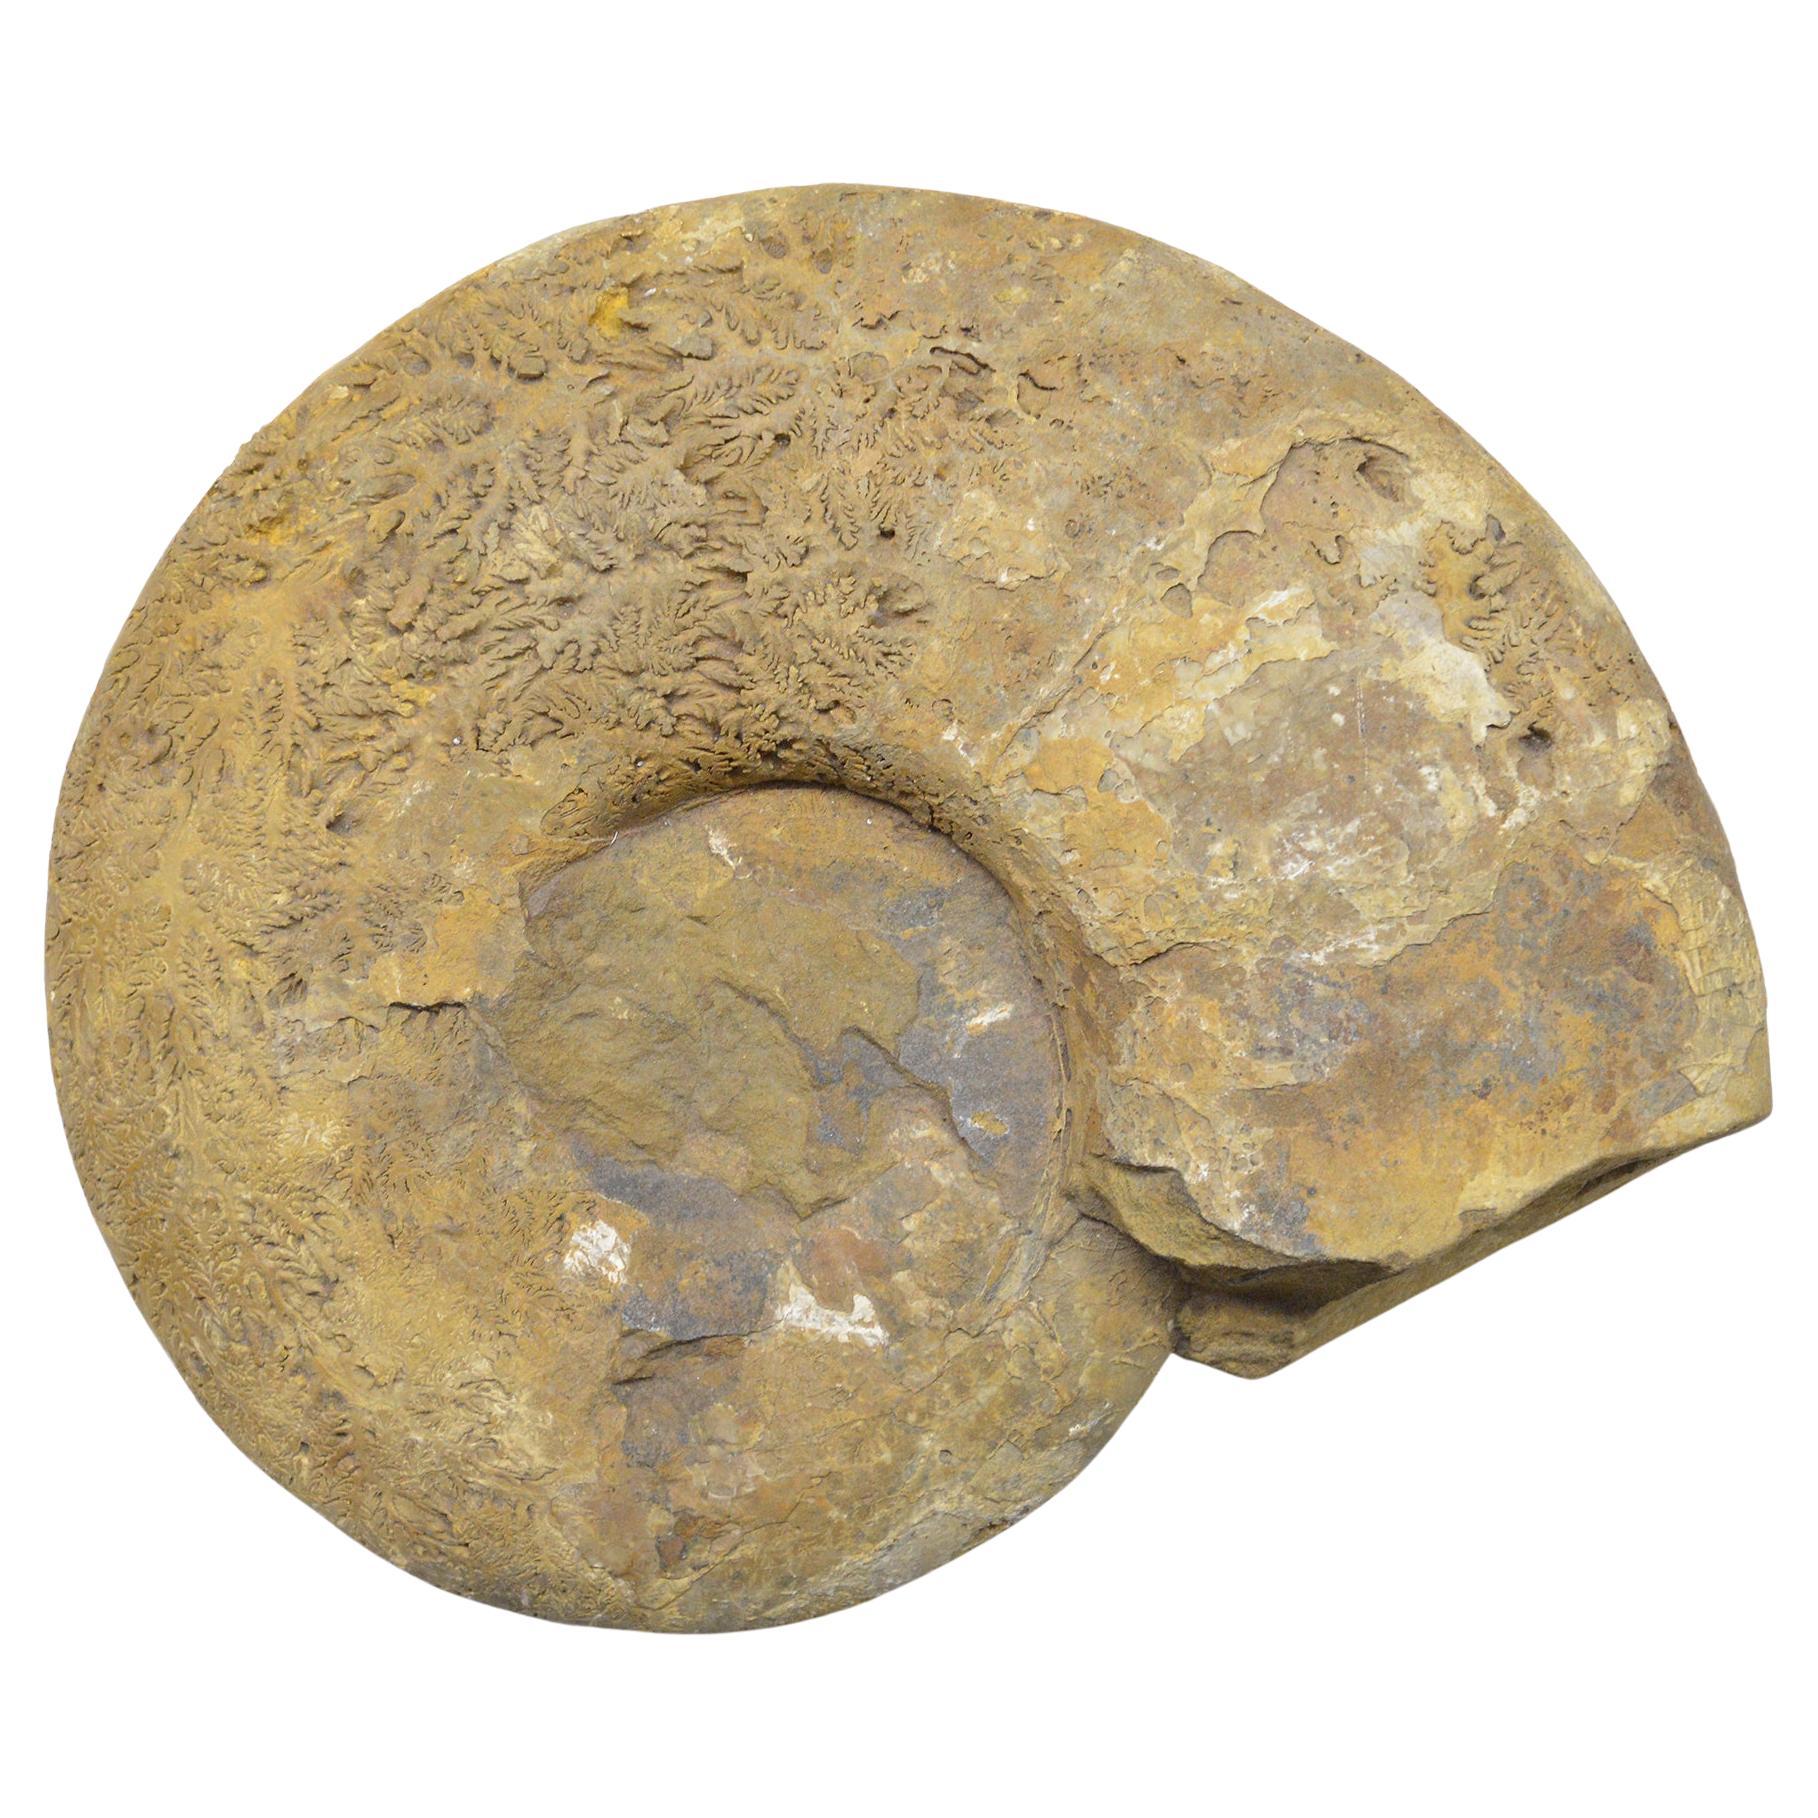 Ammonite en pierre fossile de grande taille